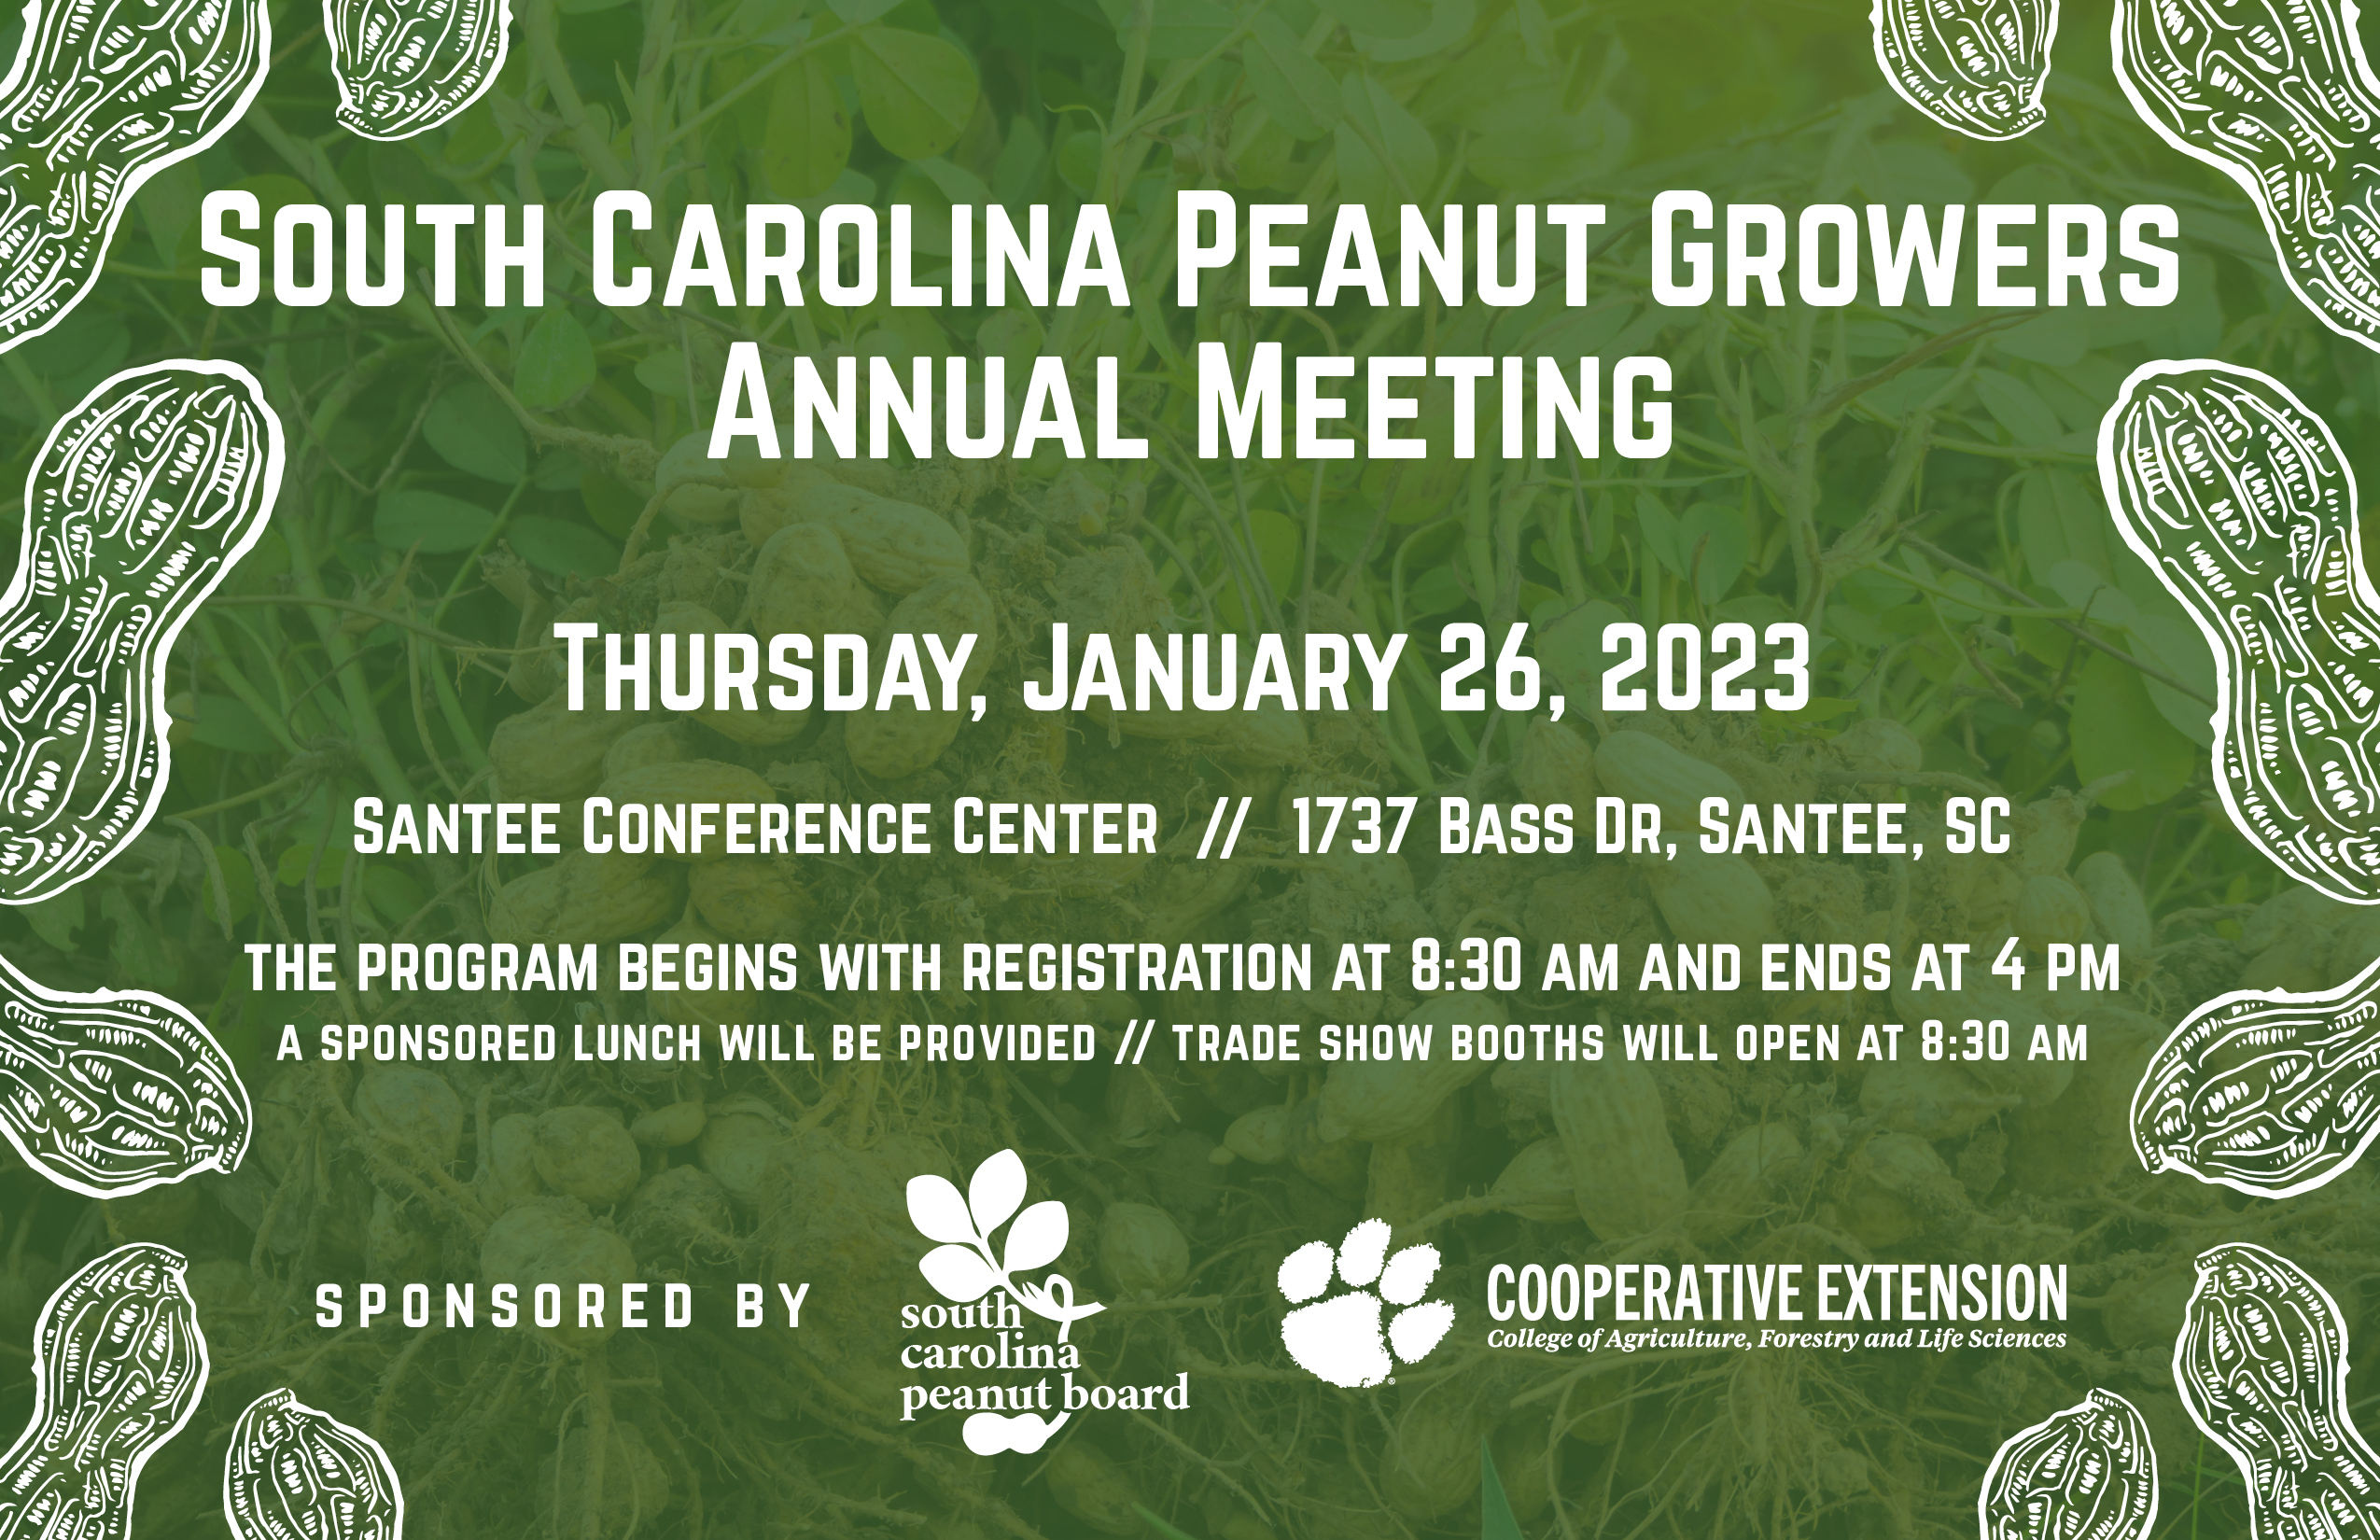 South Carolina Peanut Growers Annual Meeting. Thursday, January 26, 2023